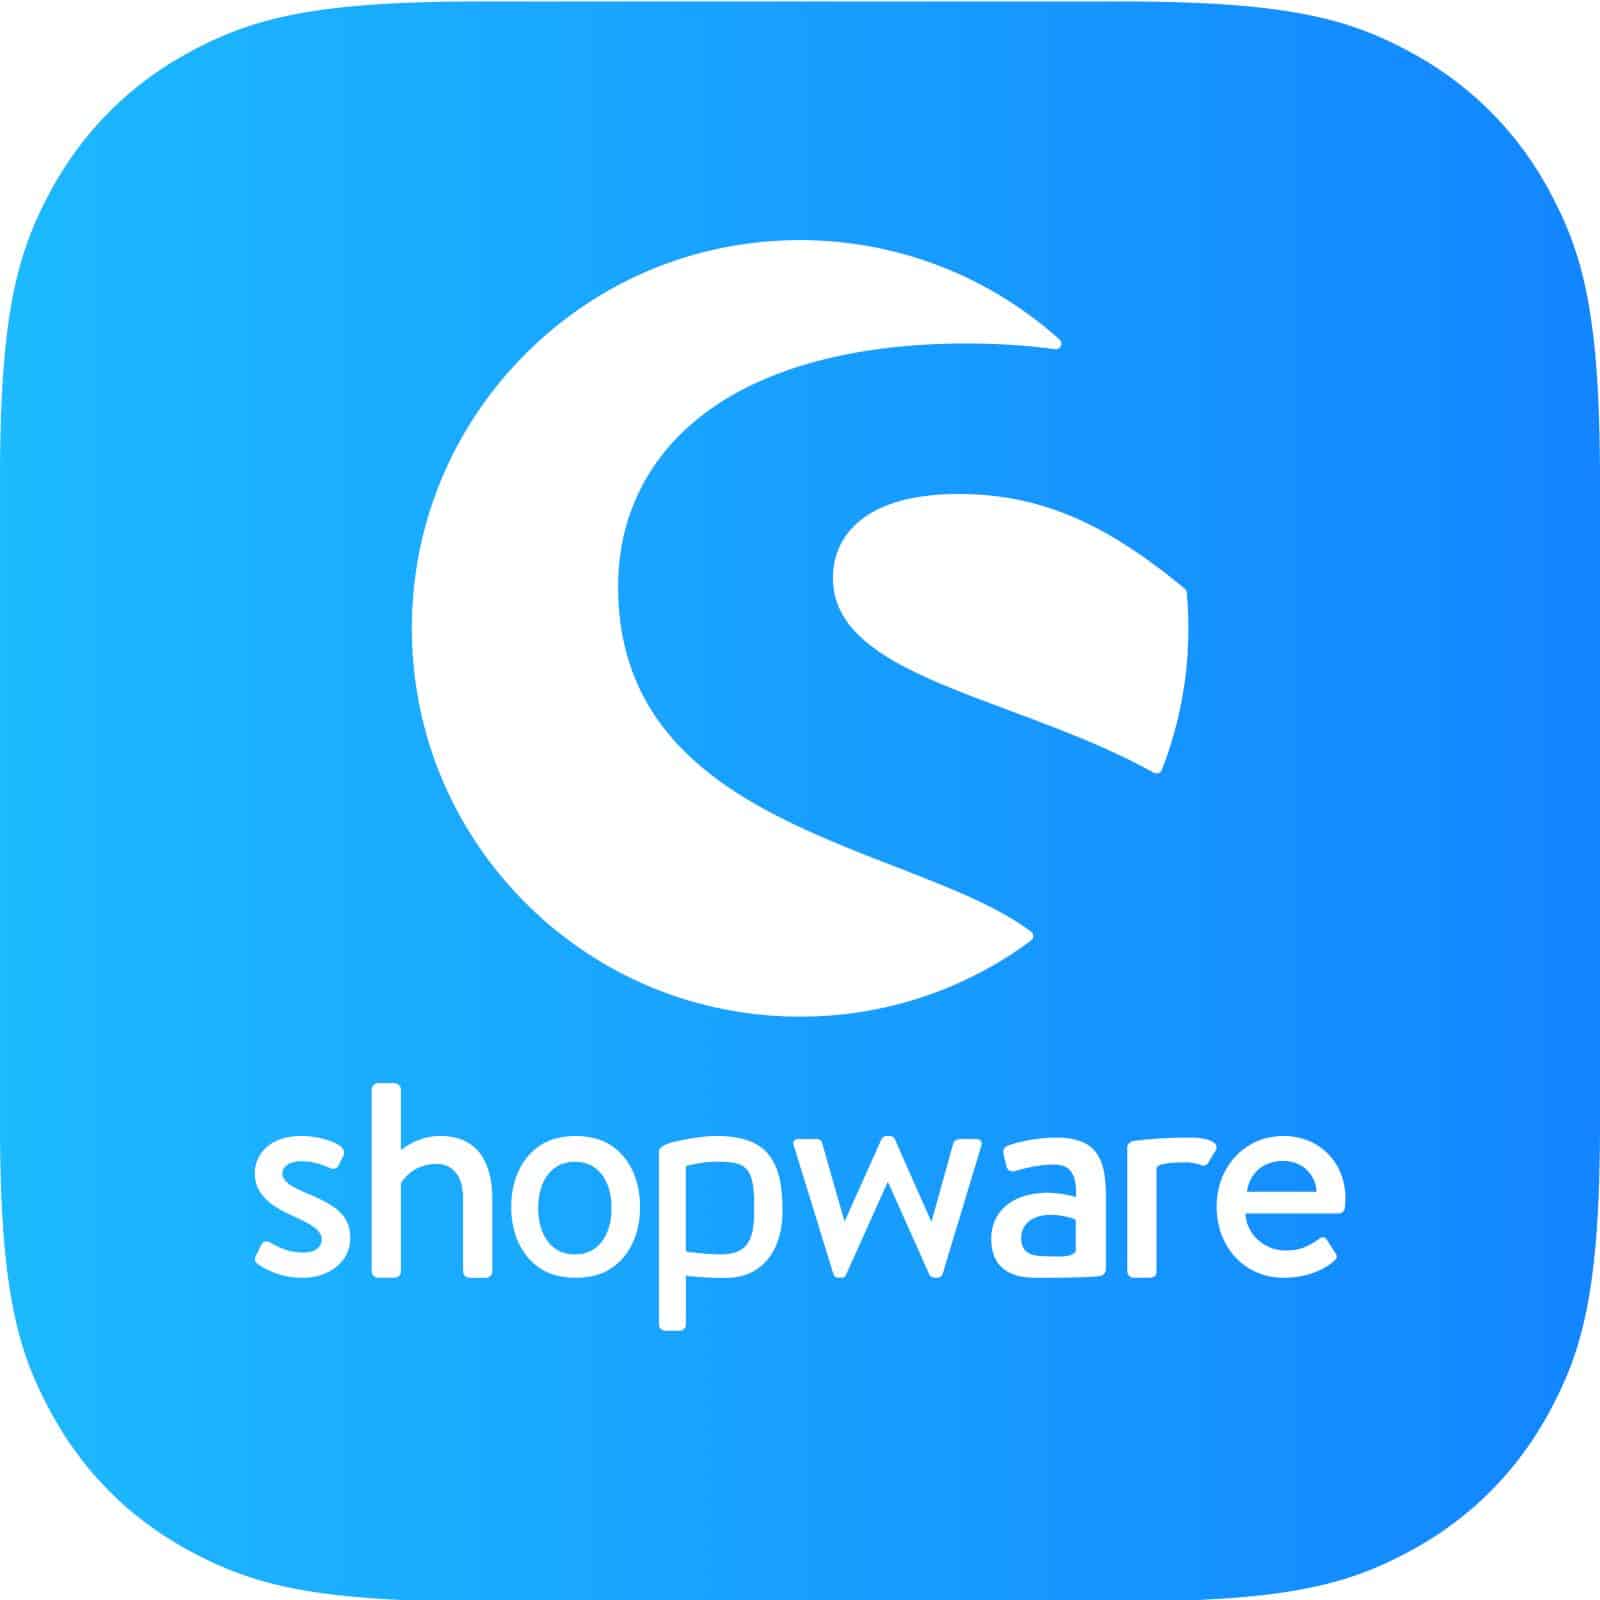 Shopware integration logo icon